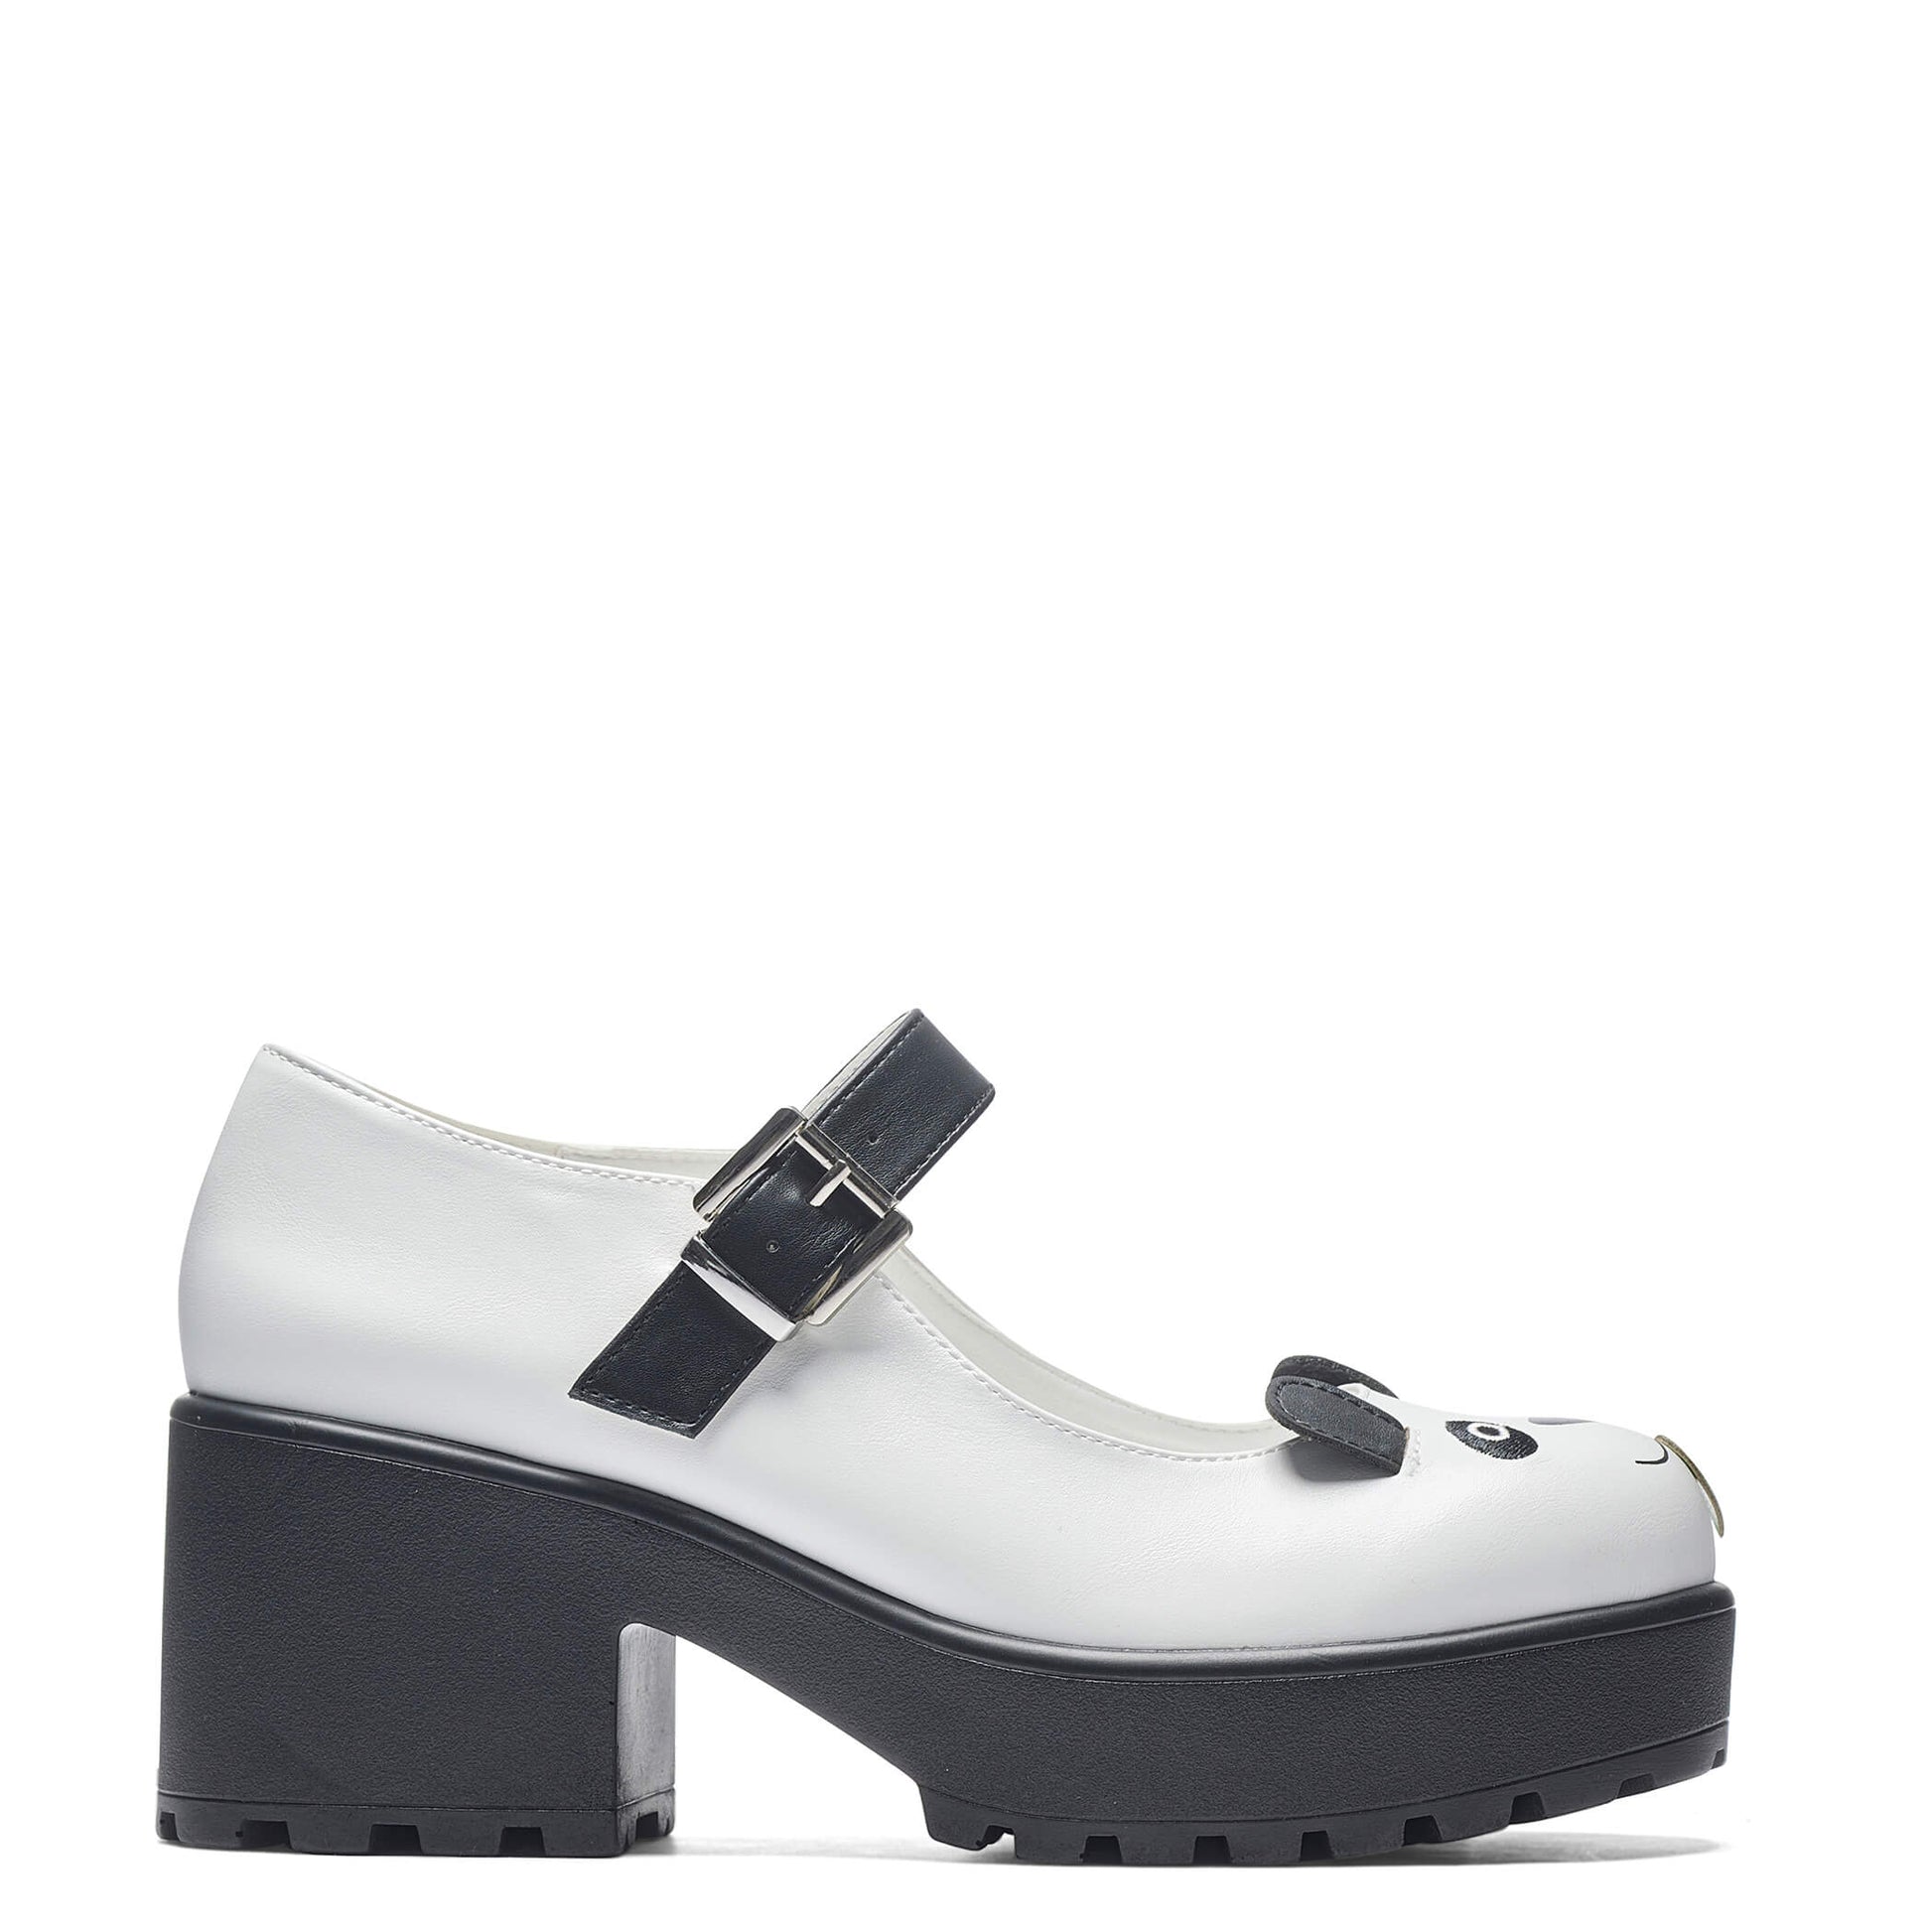 Tira Mary Jane Shoes 'Pondering Panda Edition' - Black & White - KOI Footwear - Side View